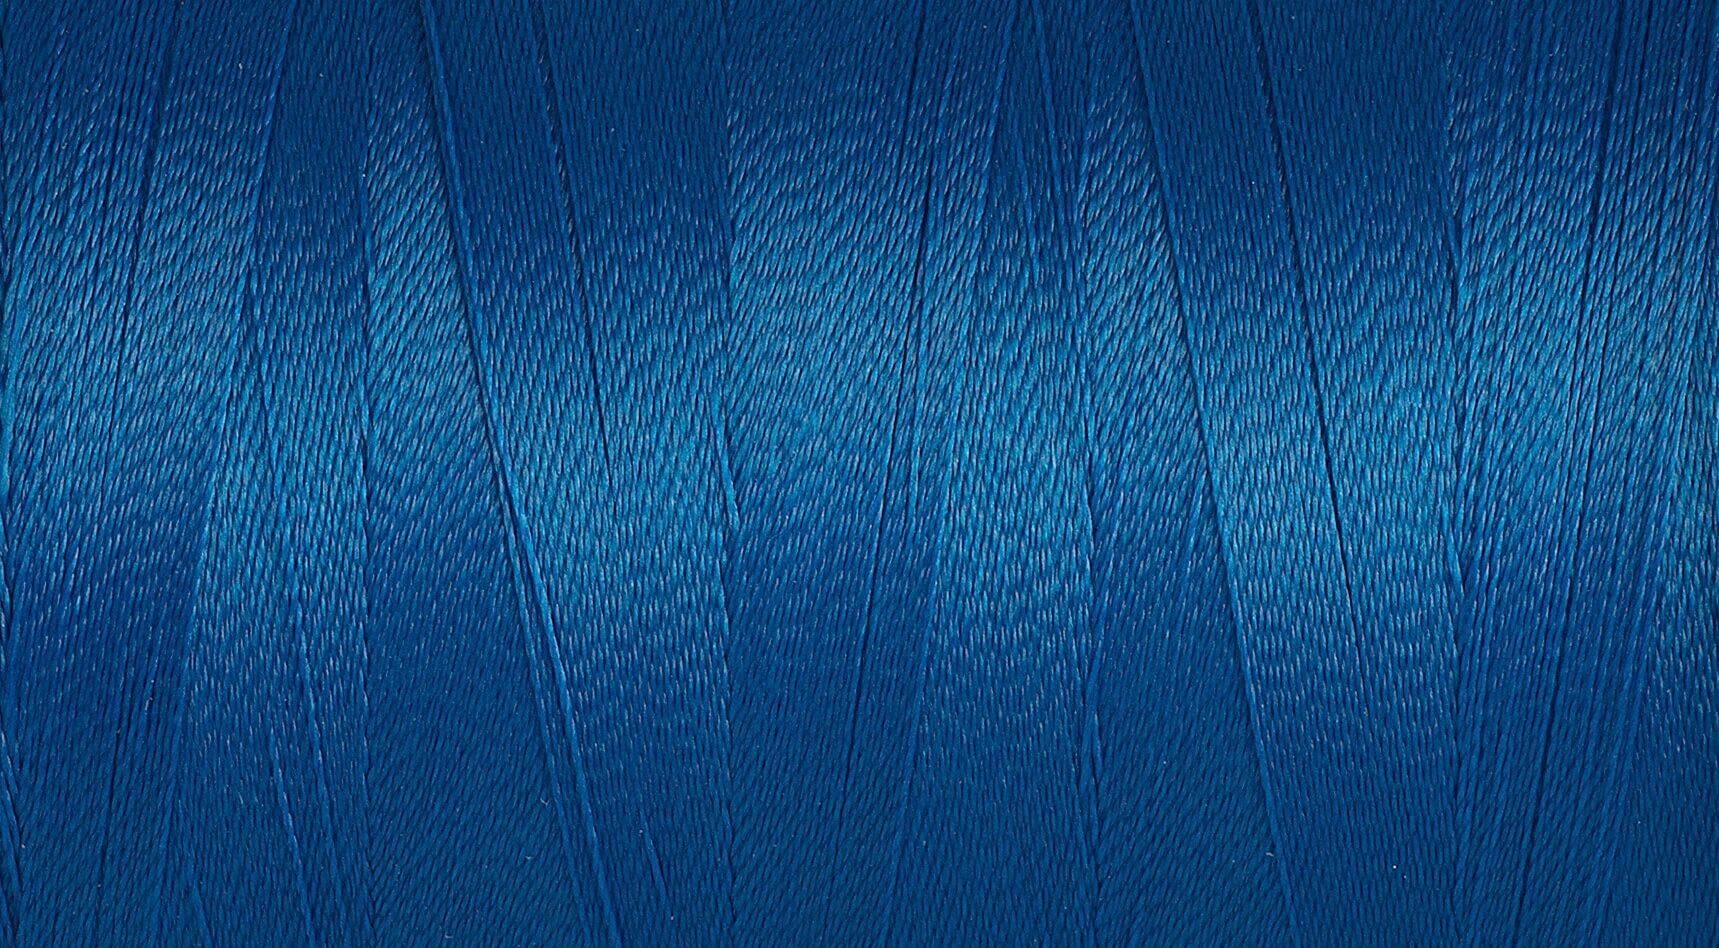 Gutermann Bulky Lock 80 overlocking thread in colour 322 Lapis Blue